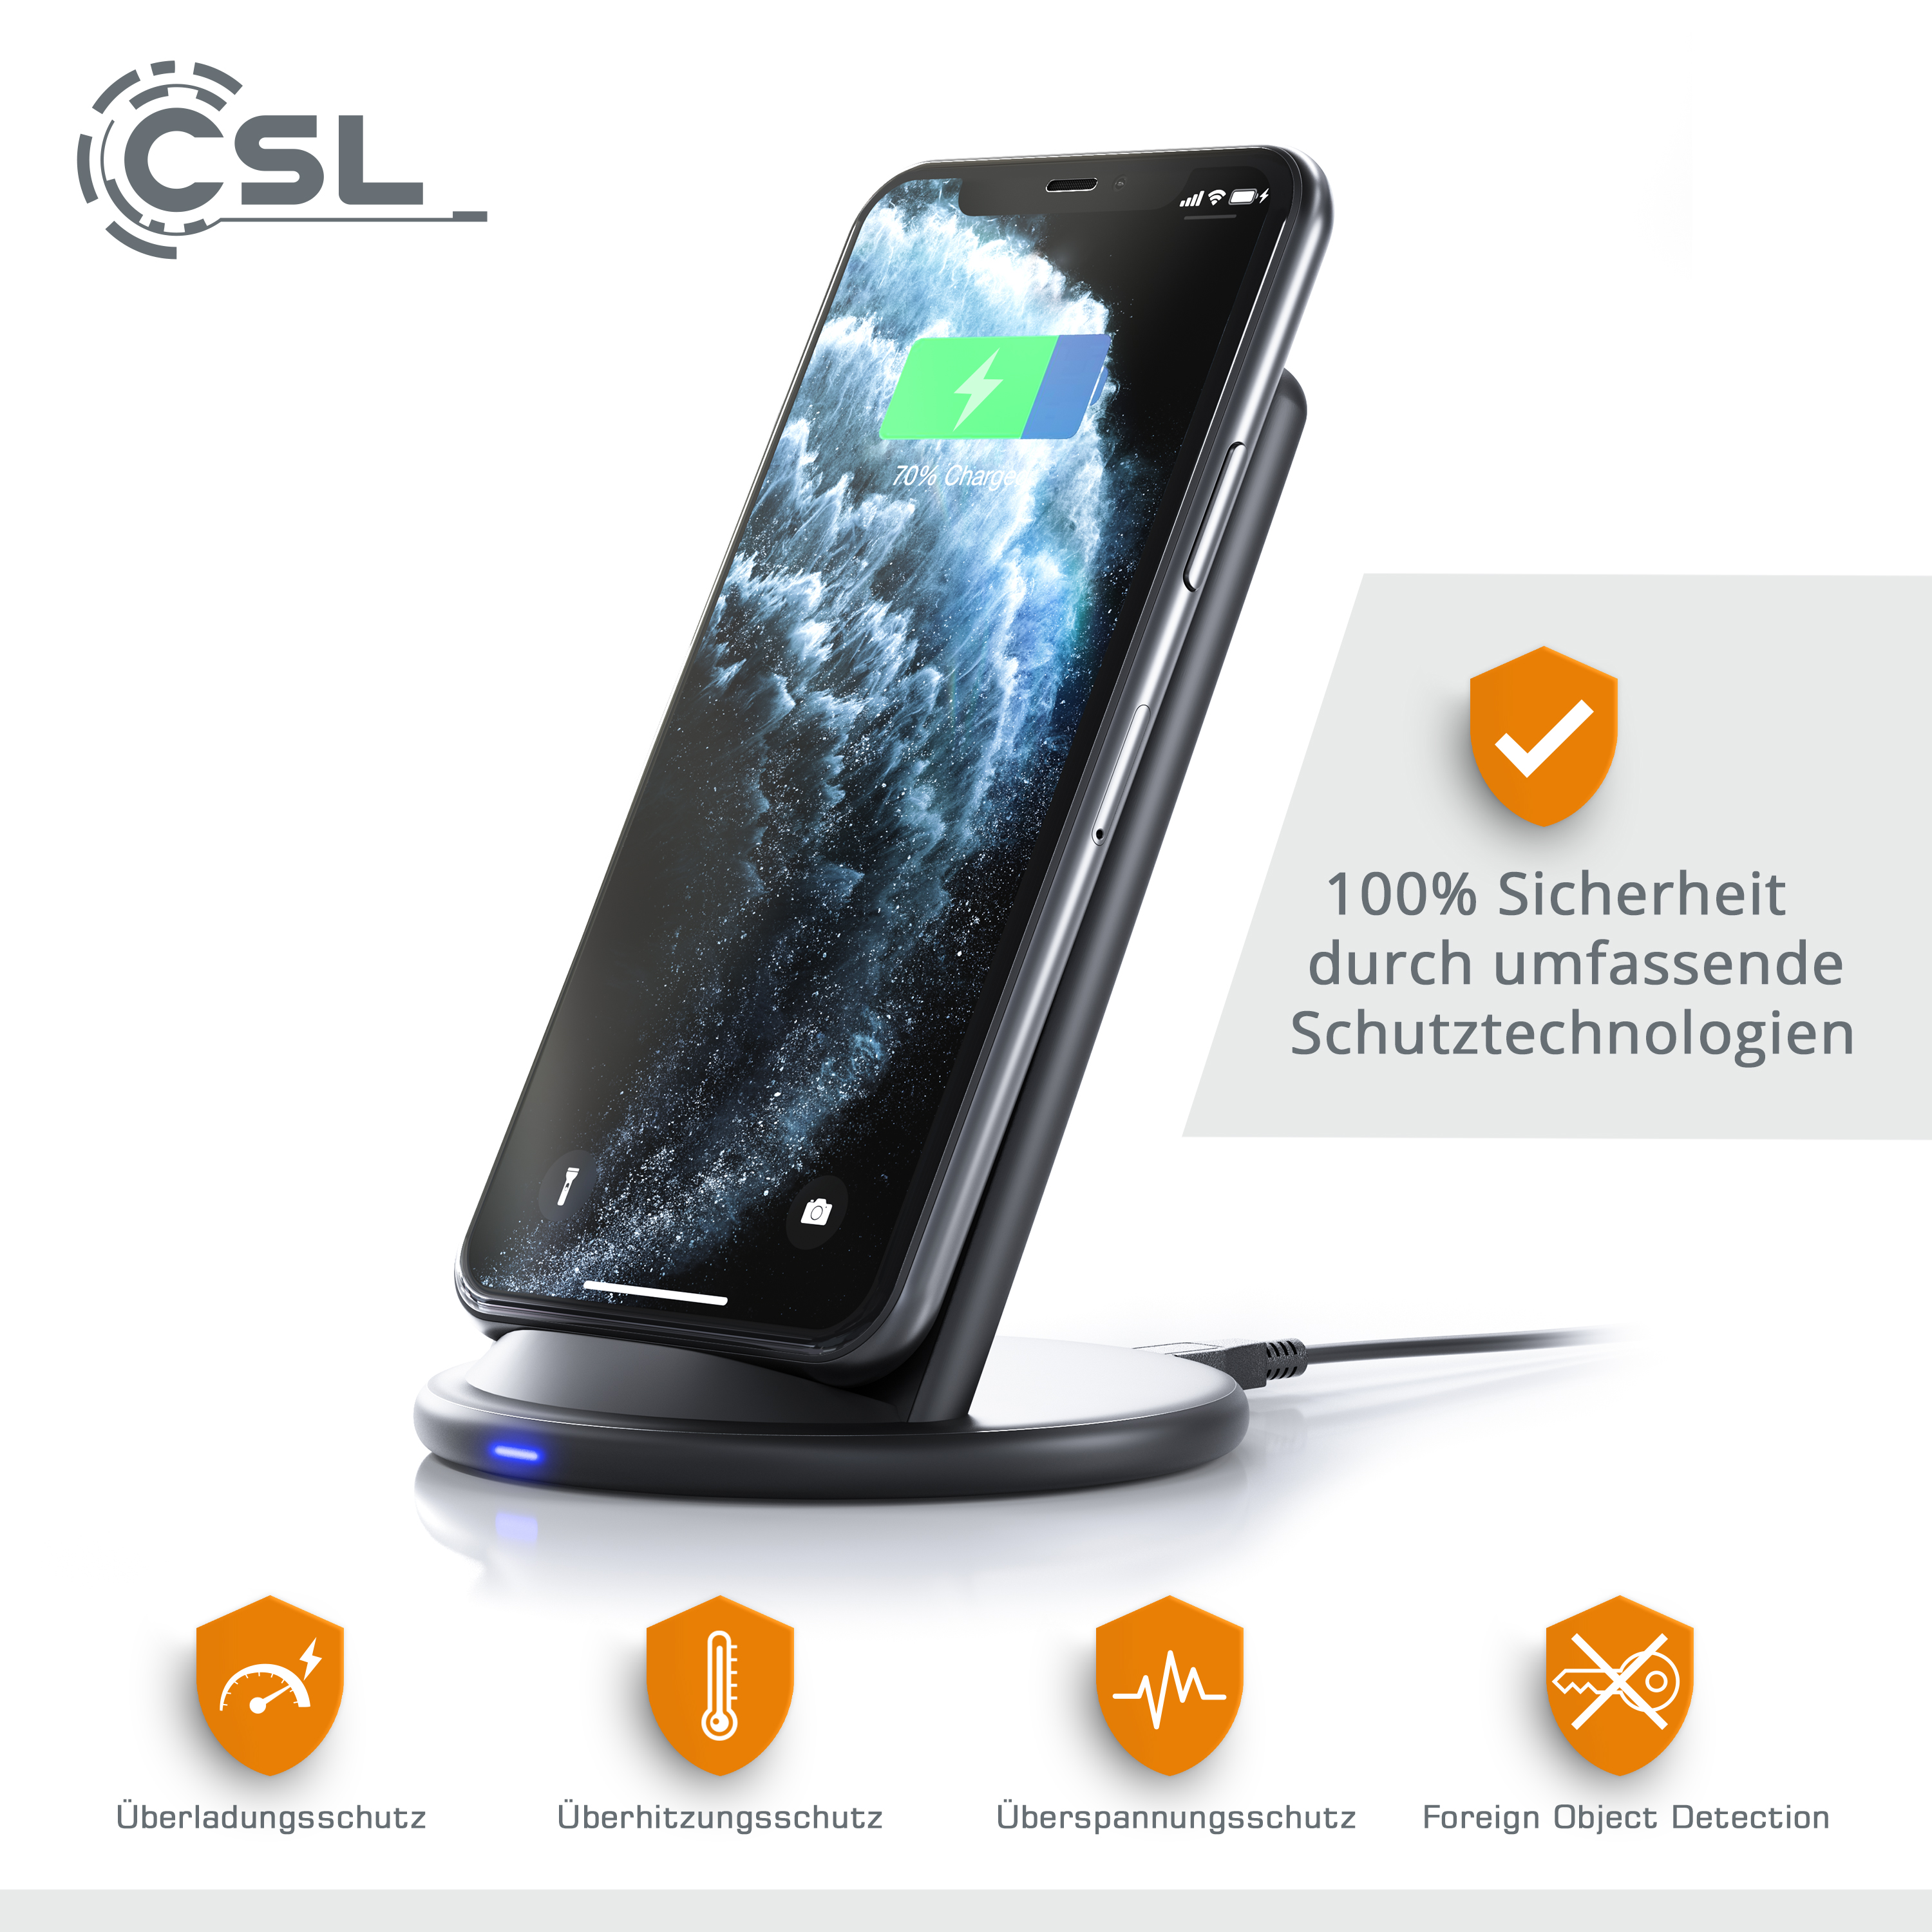 CSL Qi Stand Wireless Charger silber-schwarz Universal, Ladegerät